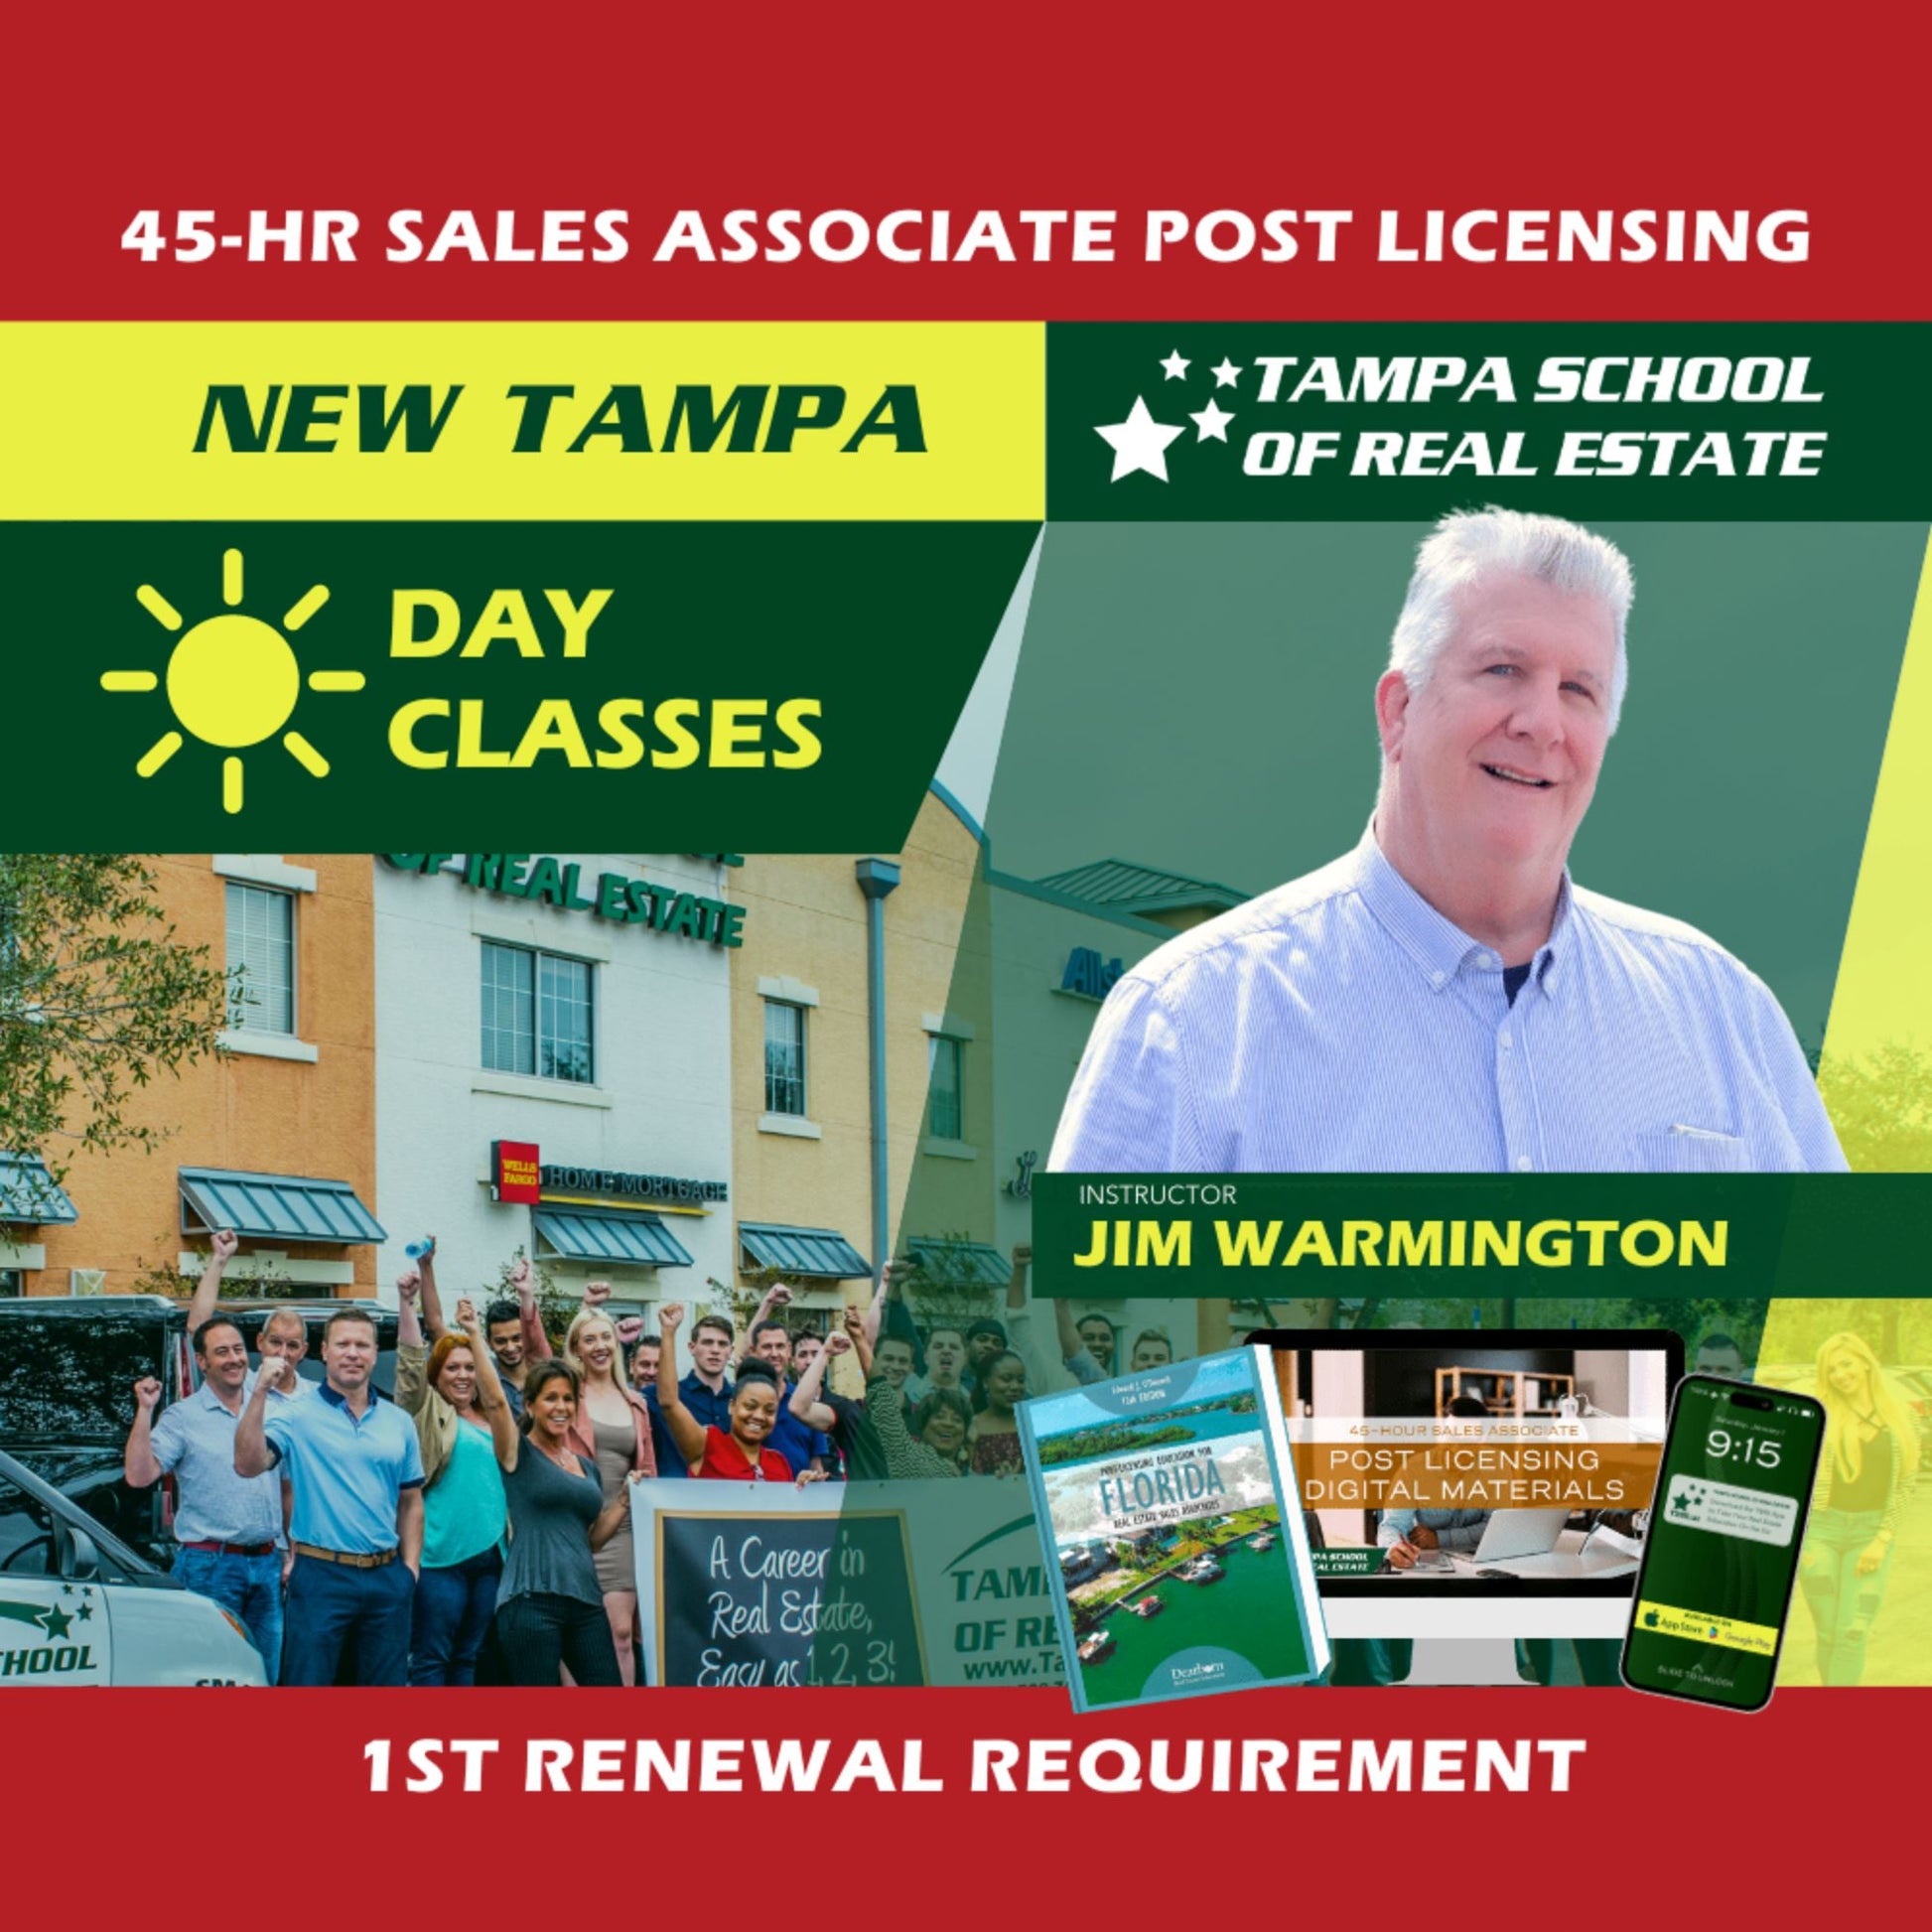 New Tampa | Jun 17 8:30am | 45-HR FL Post Licensing Course SLPOST TSRE New Tampa | Tampa School of Real Estate 